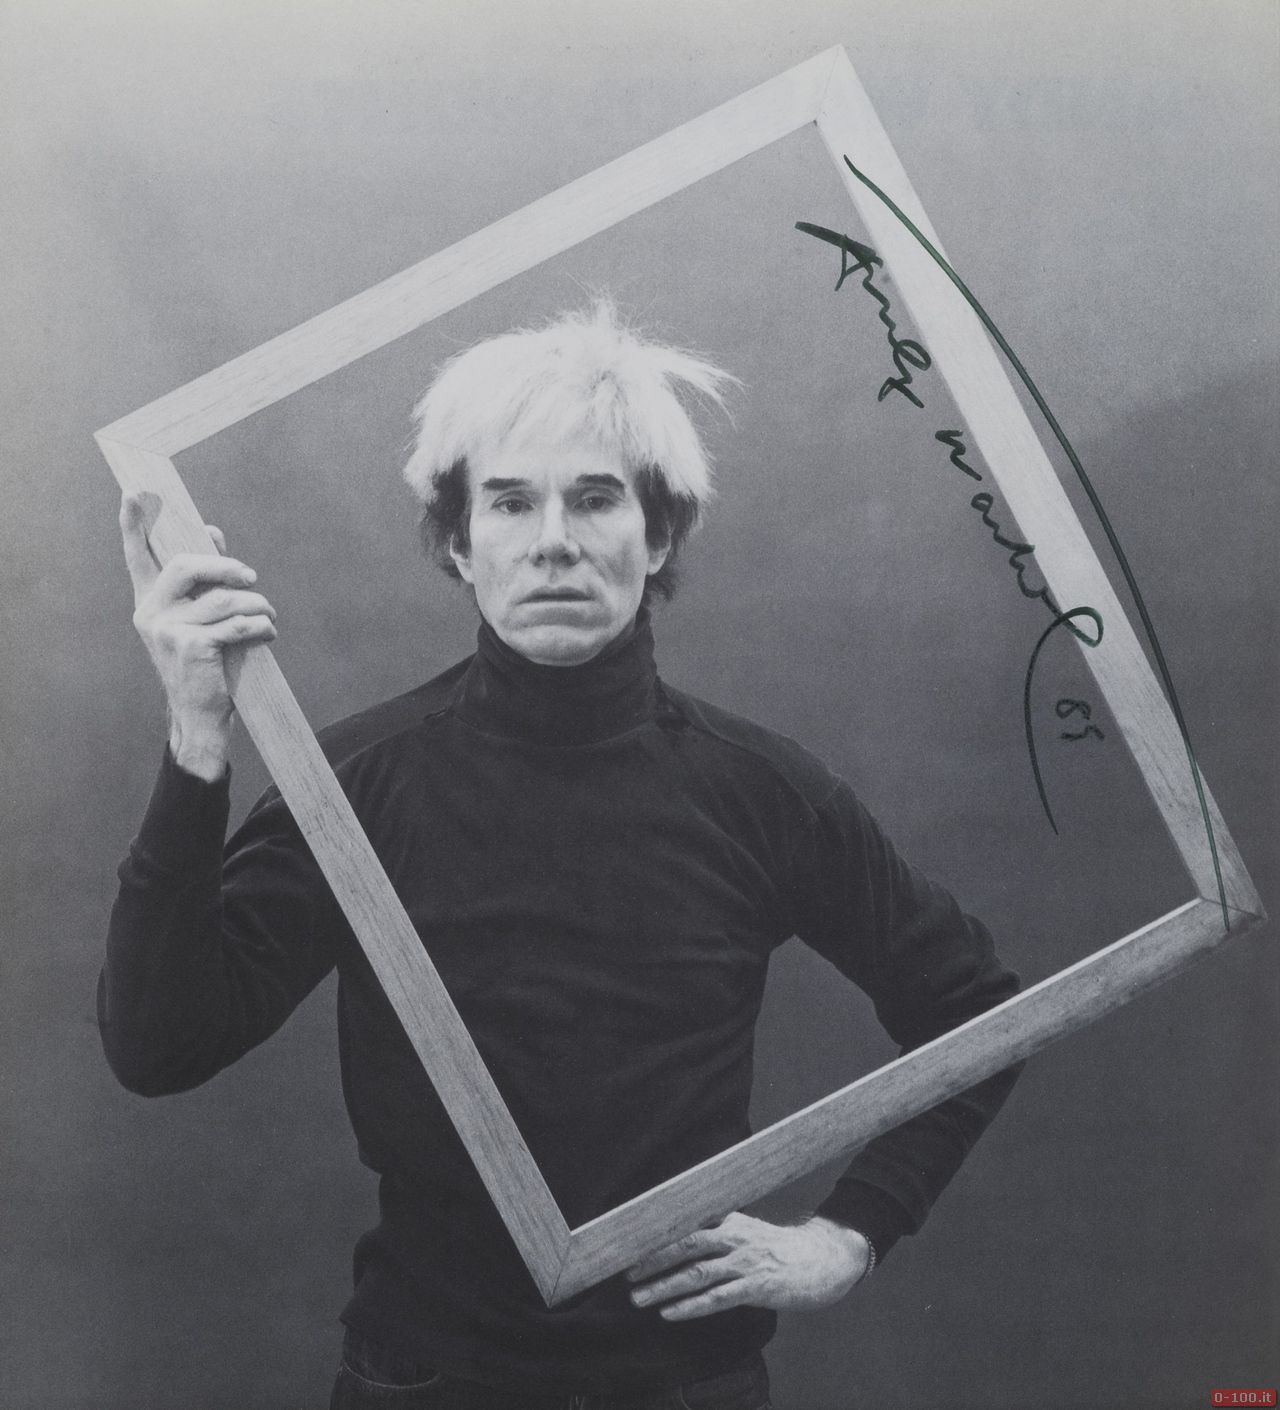 Andy_Warhol_10-100